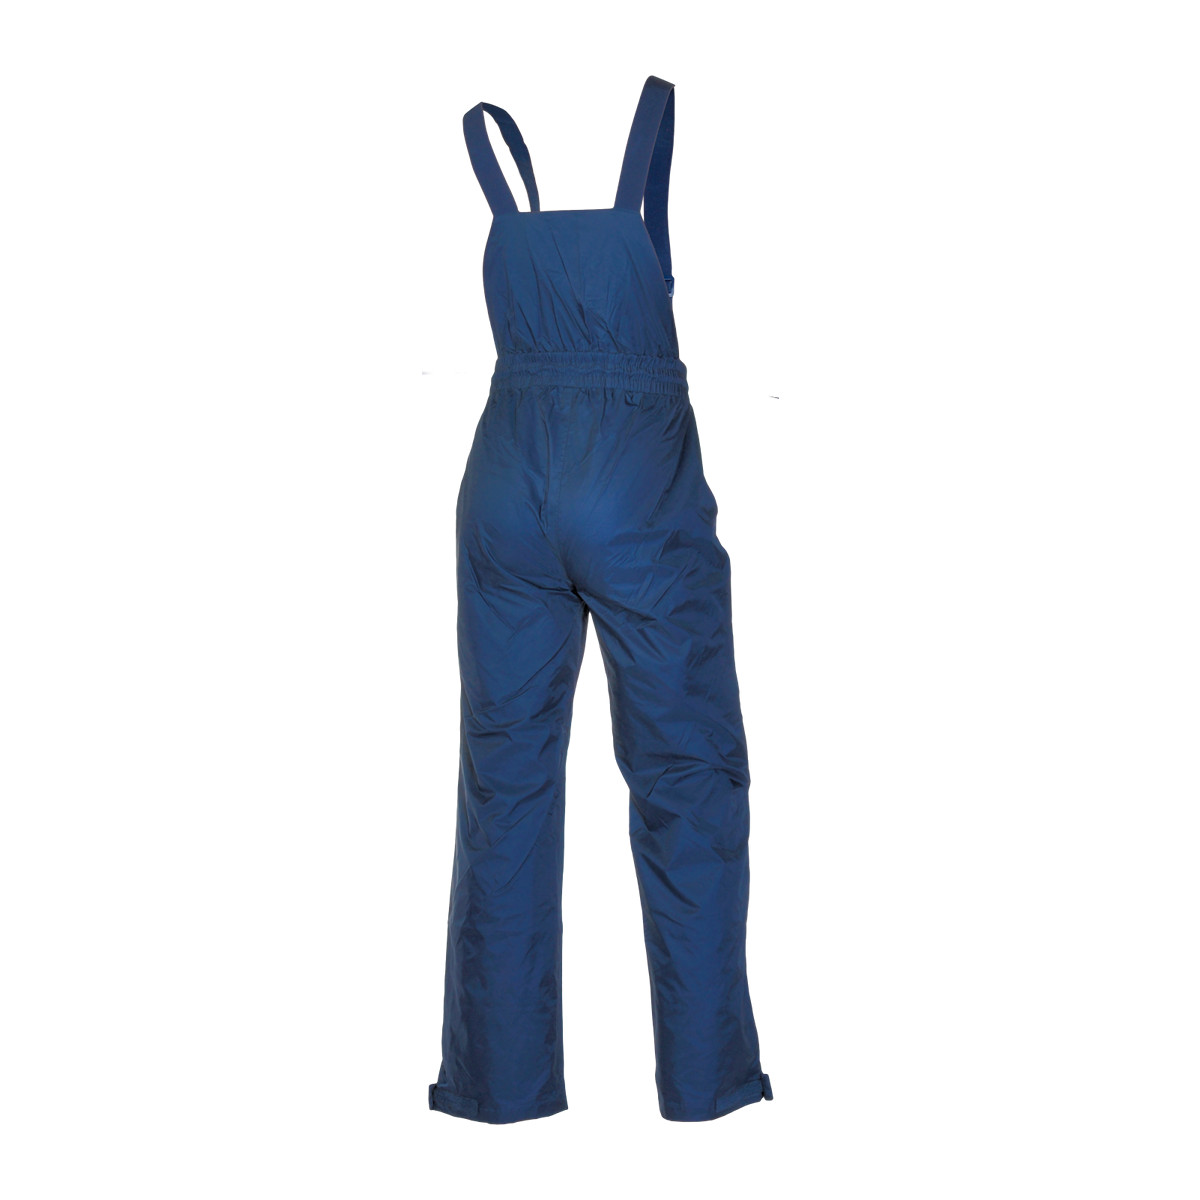 Dry Fashion Baltic Crew pantalon de voile unisexe bleu marine, taille M